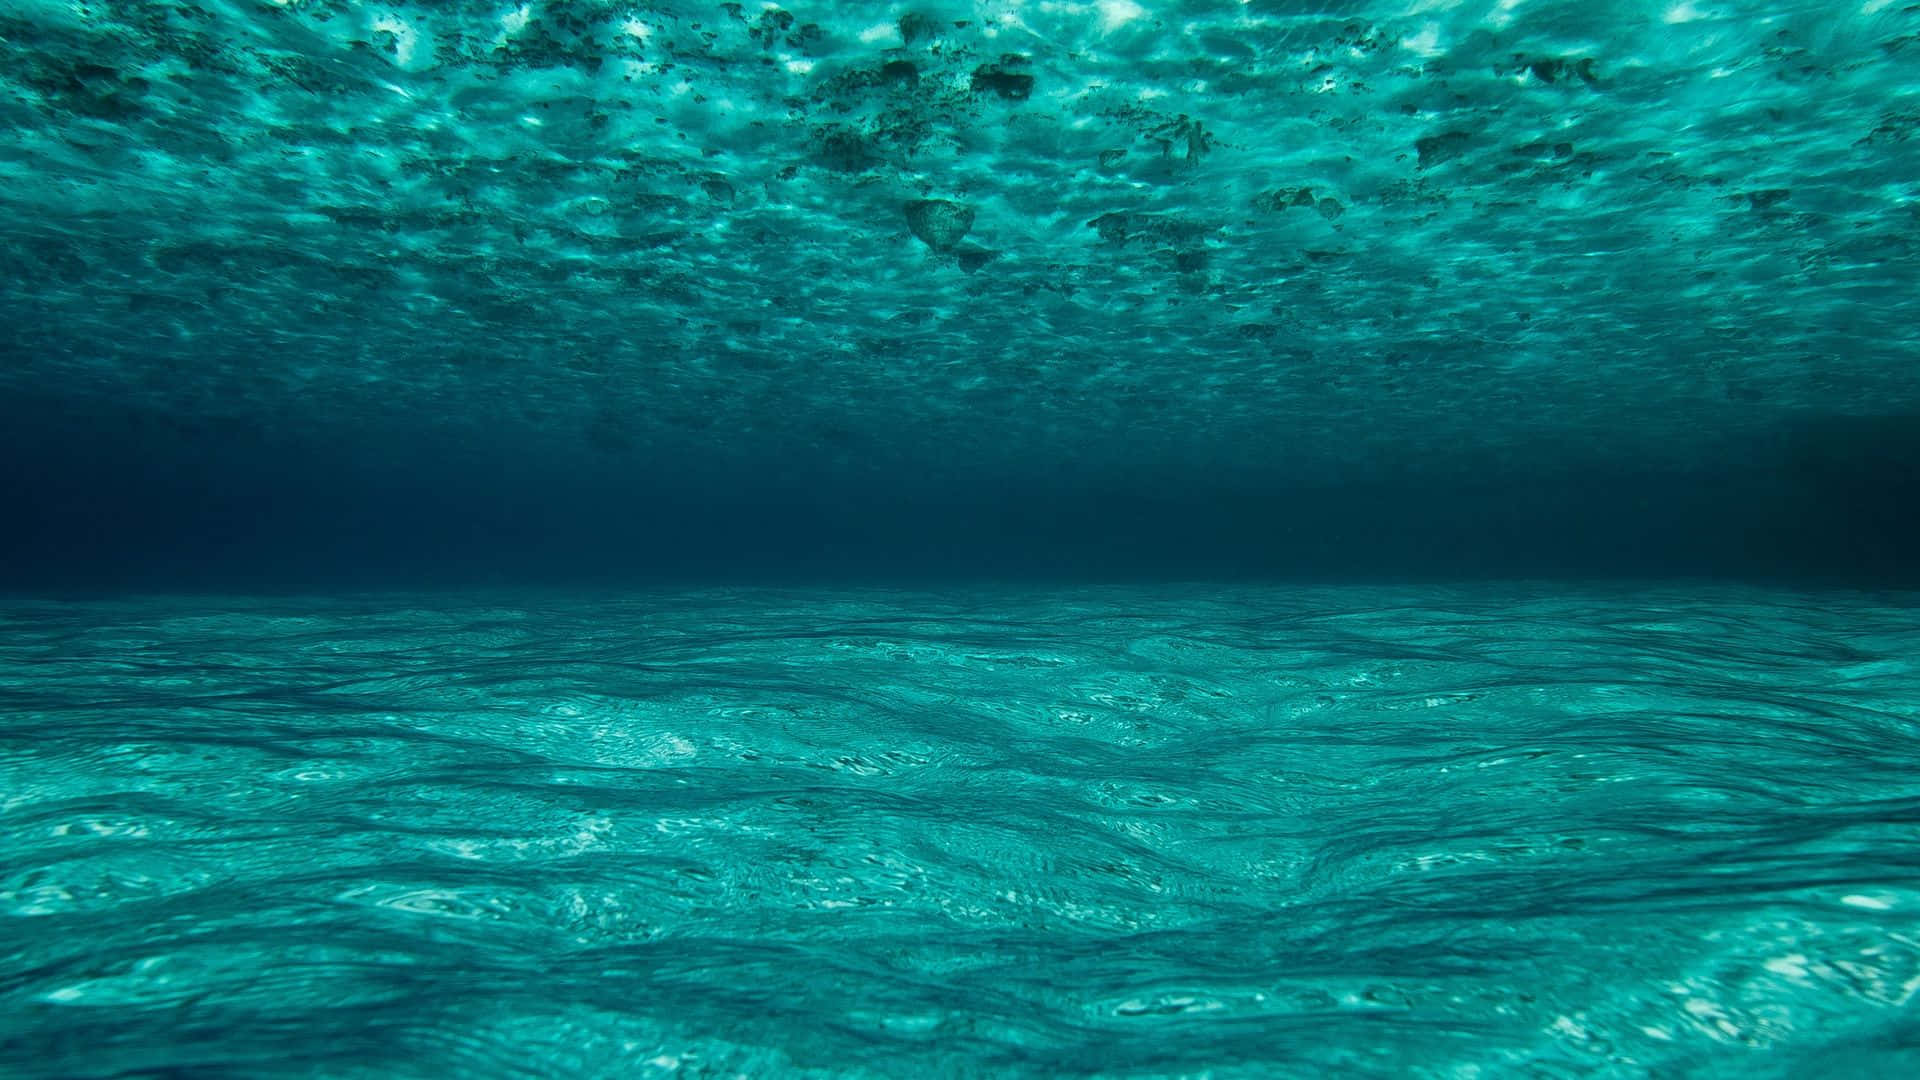 An Underwater Journey Through an Incredible Ocean World